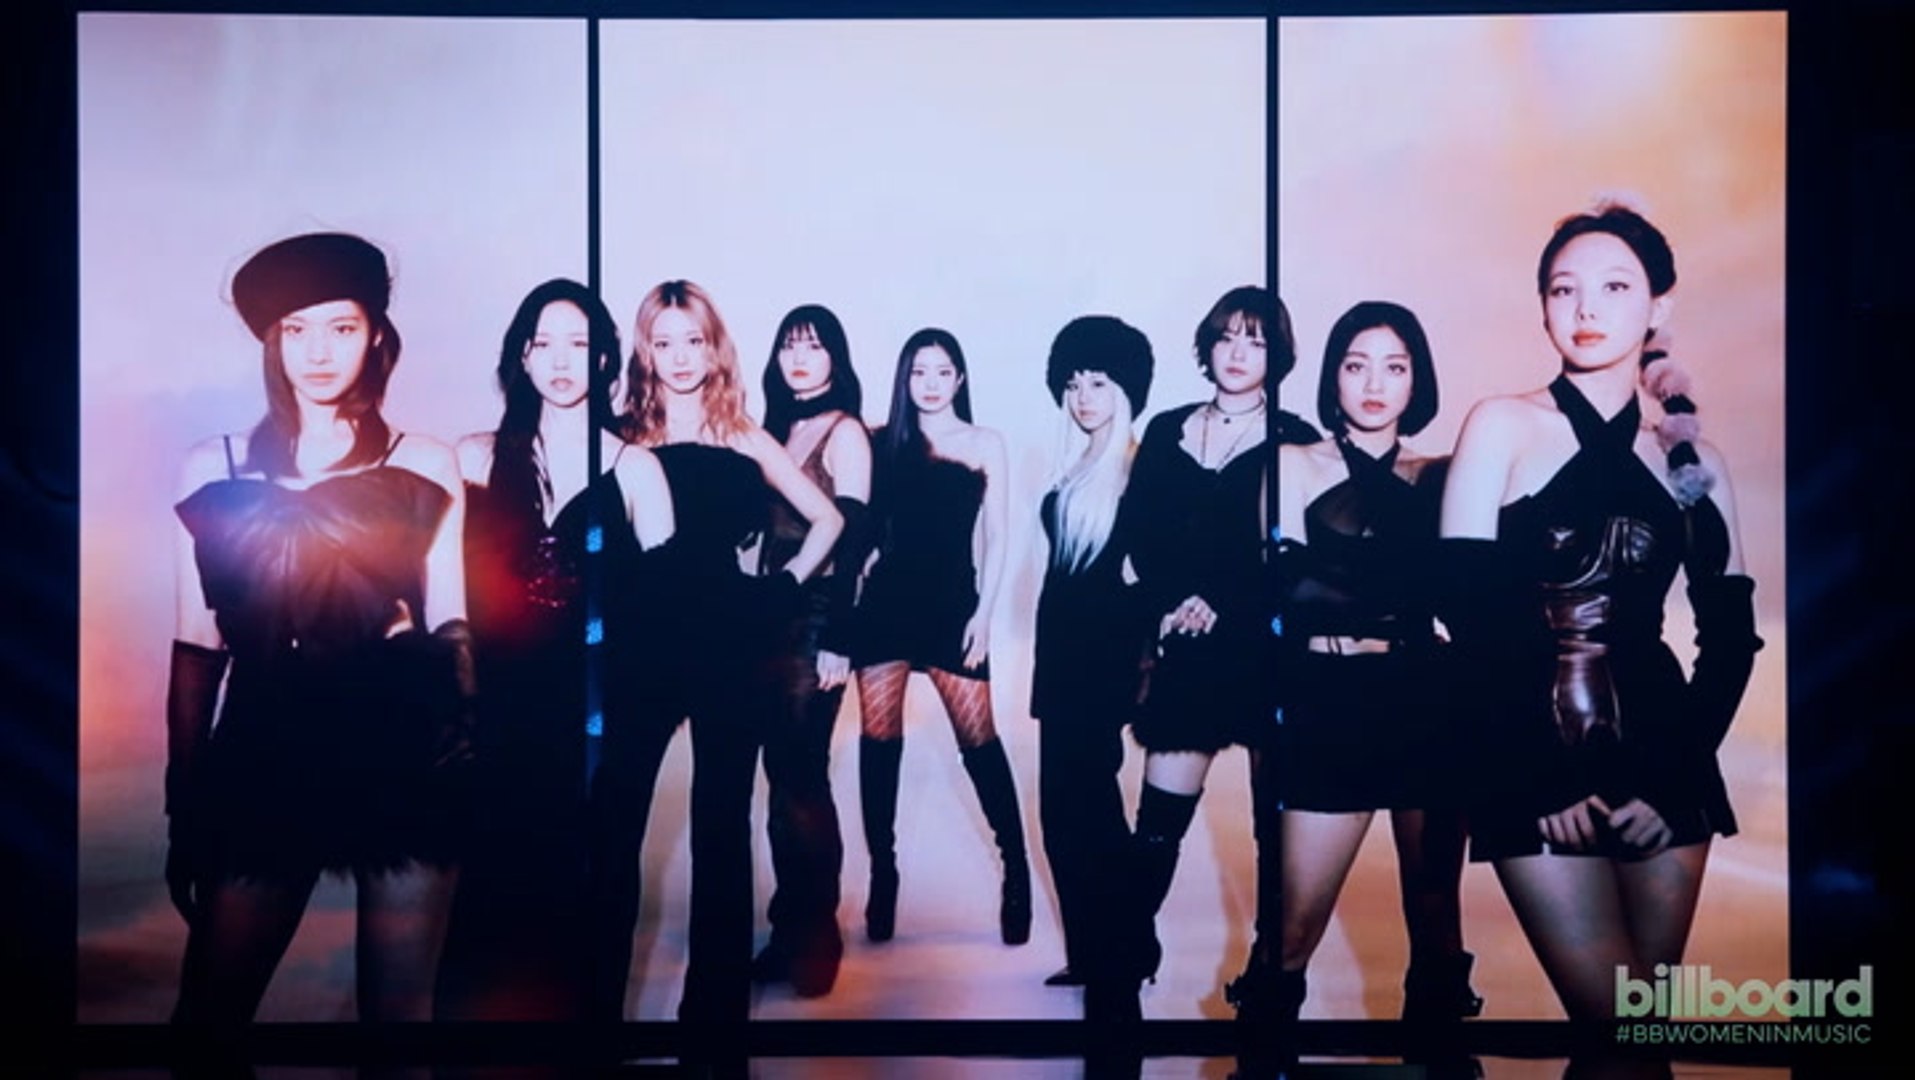 K-pop's Twice Perform at Billboard Women In Music With Dark Looks – WWD